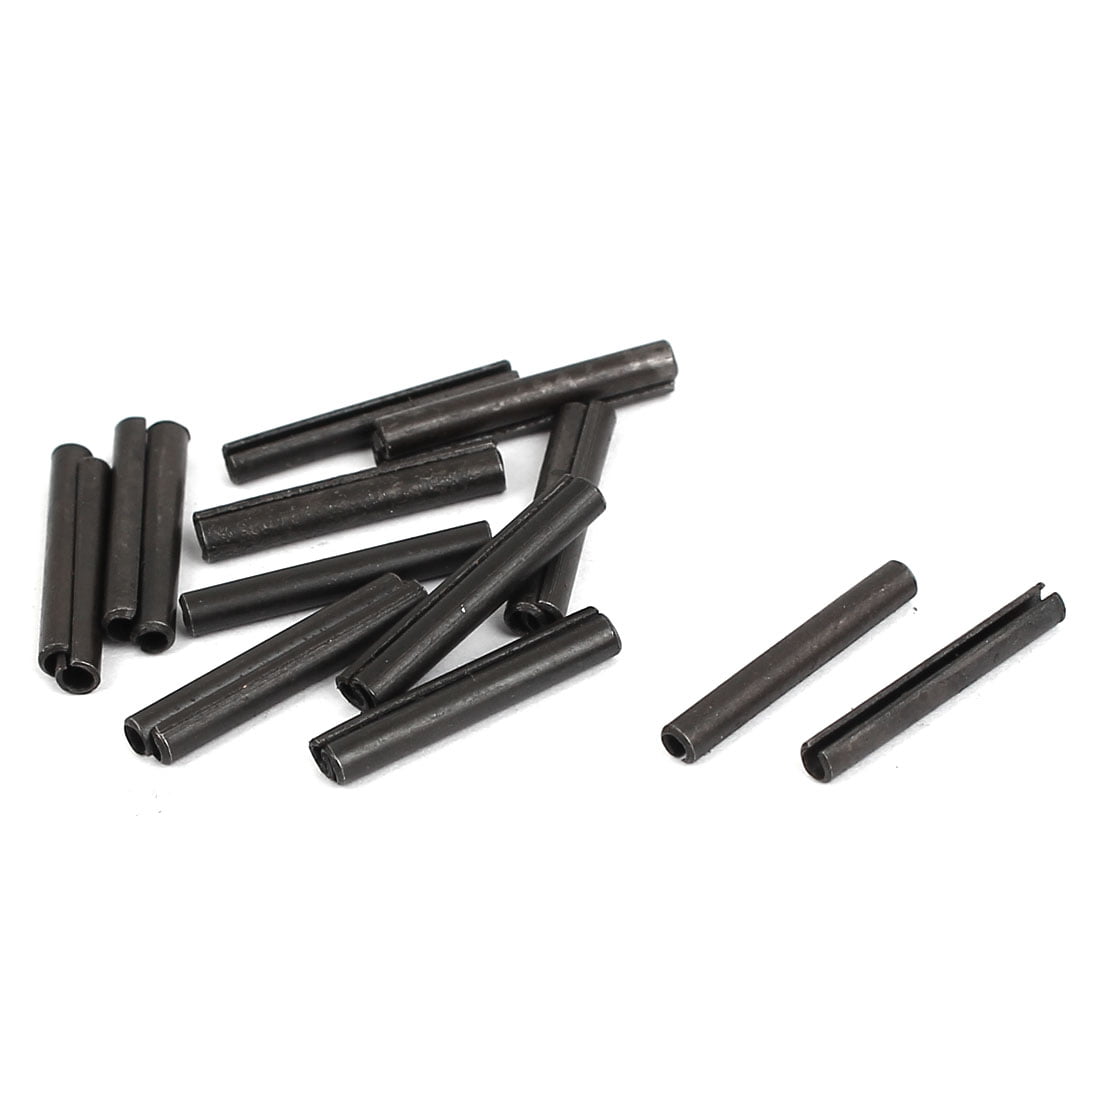 200pc Roll Pin Assortment Set Steel Split Spring Dowel Tension Fasteners Snap 